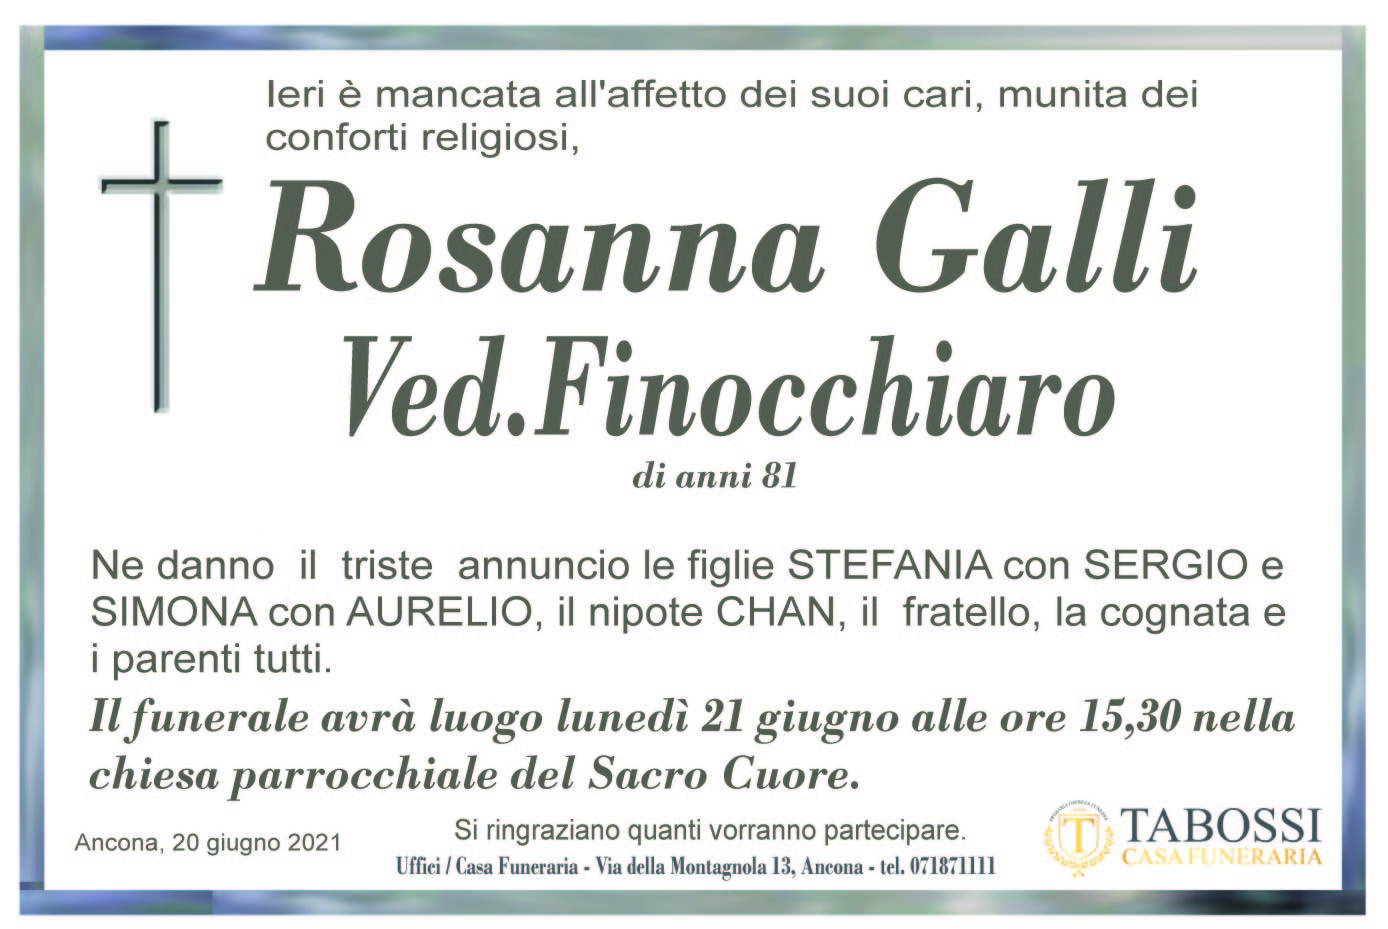 Rosanna Galli